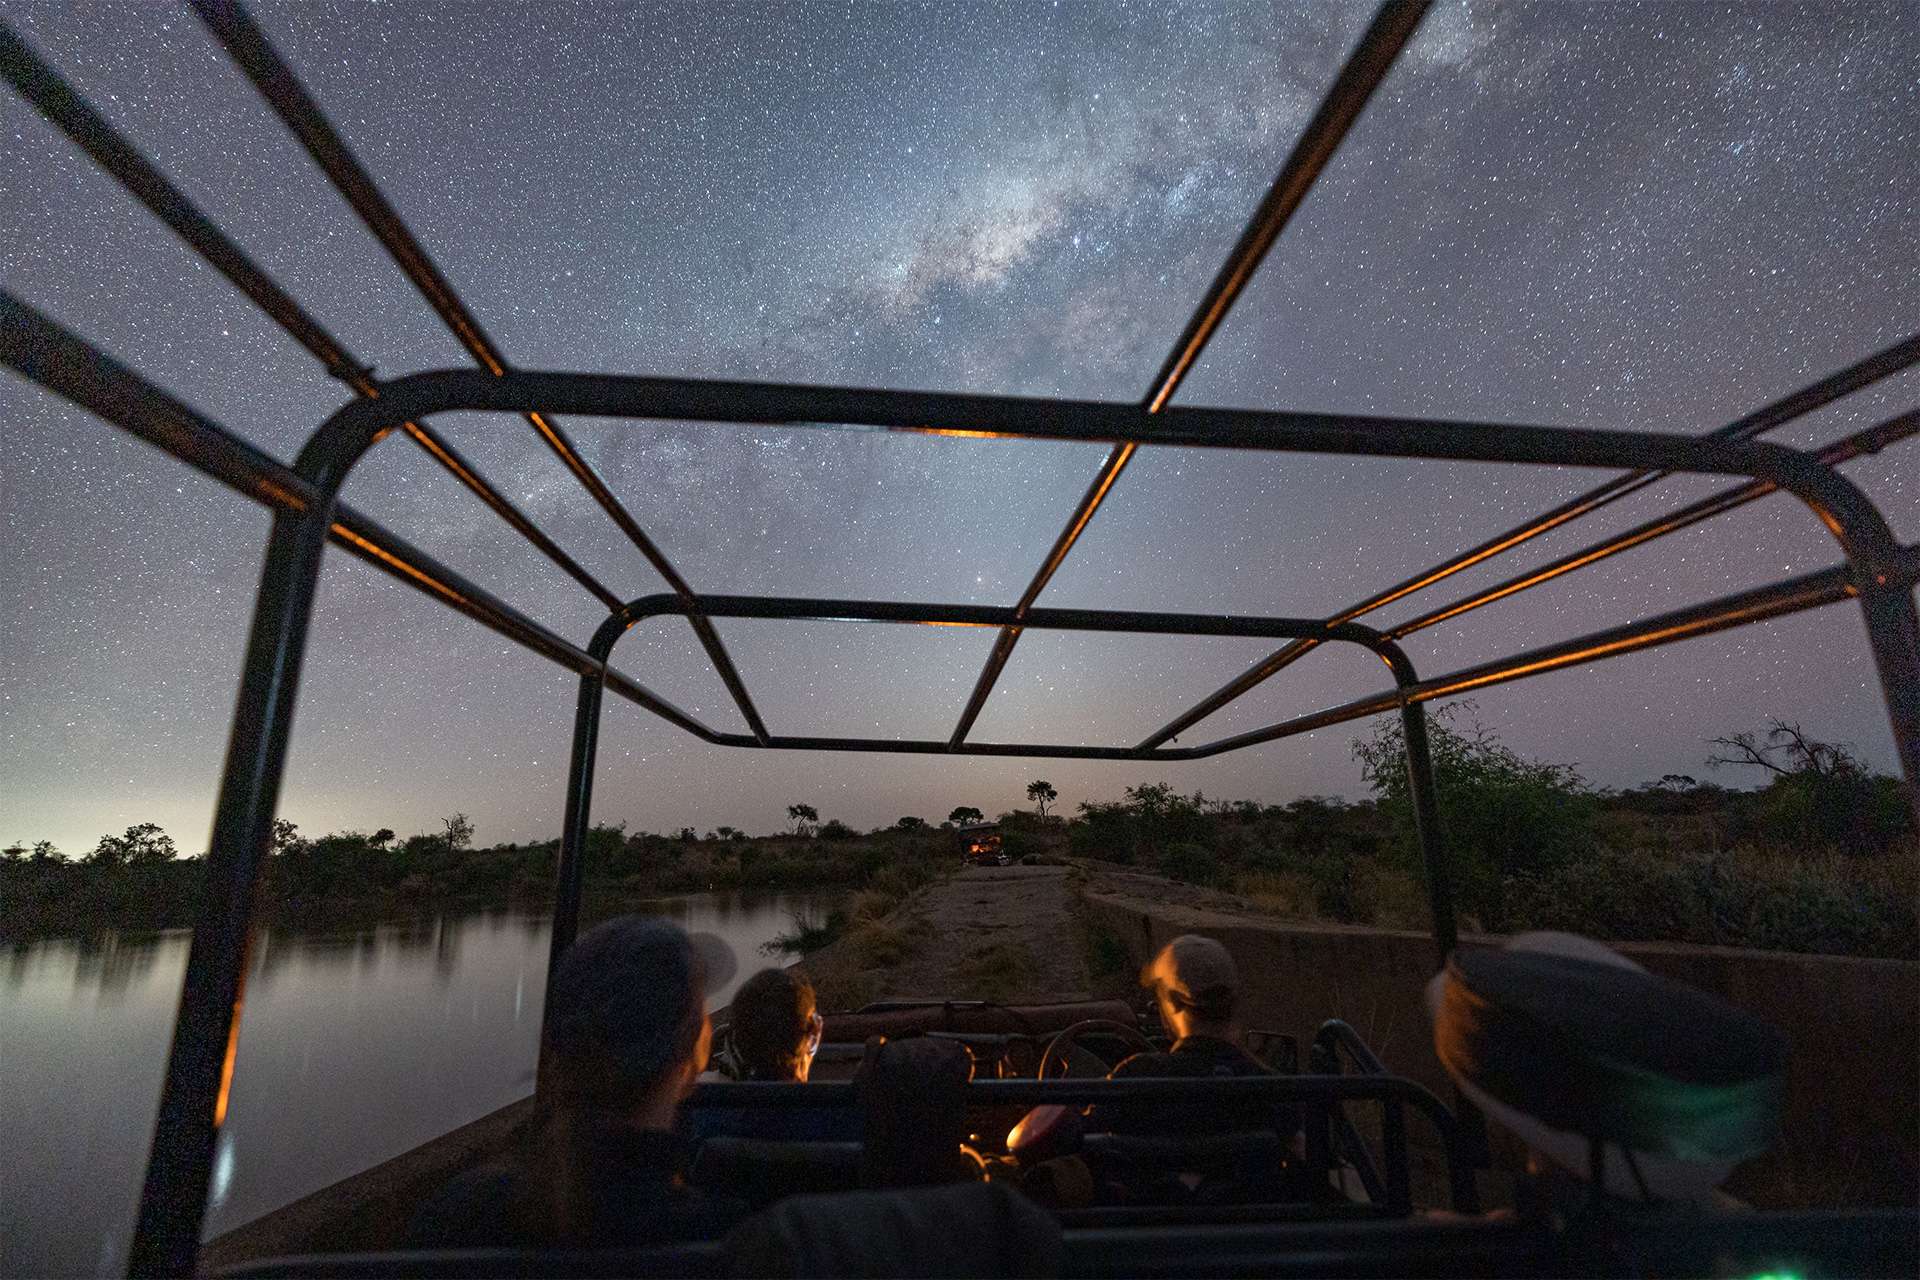 nighttime safari ride under the Milky Way night sky South Africa mala mala game reserve